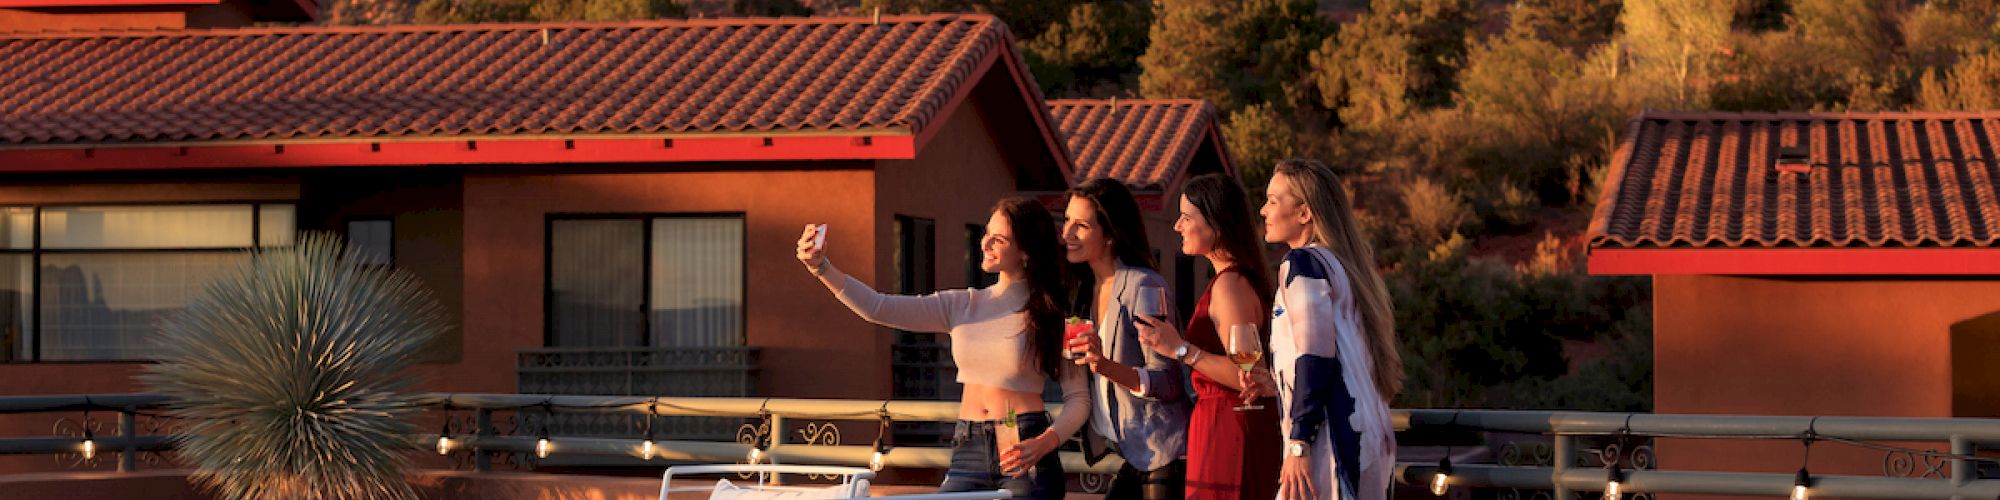 women enjoying rooftop drinks